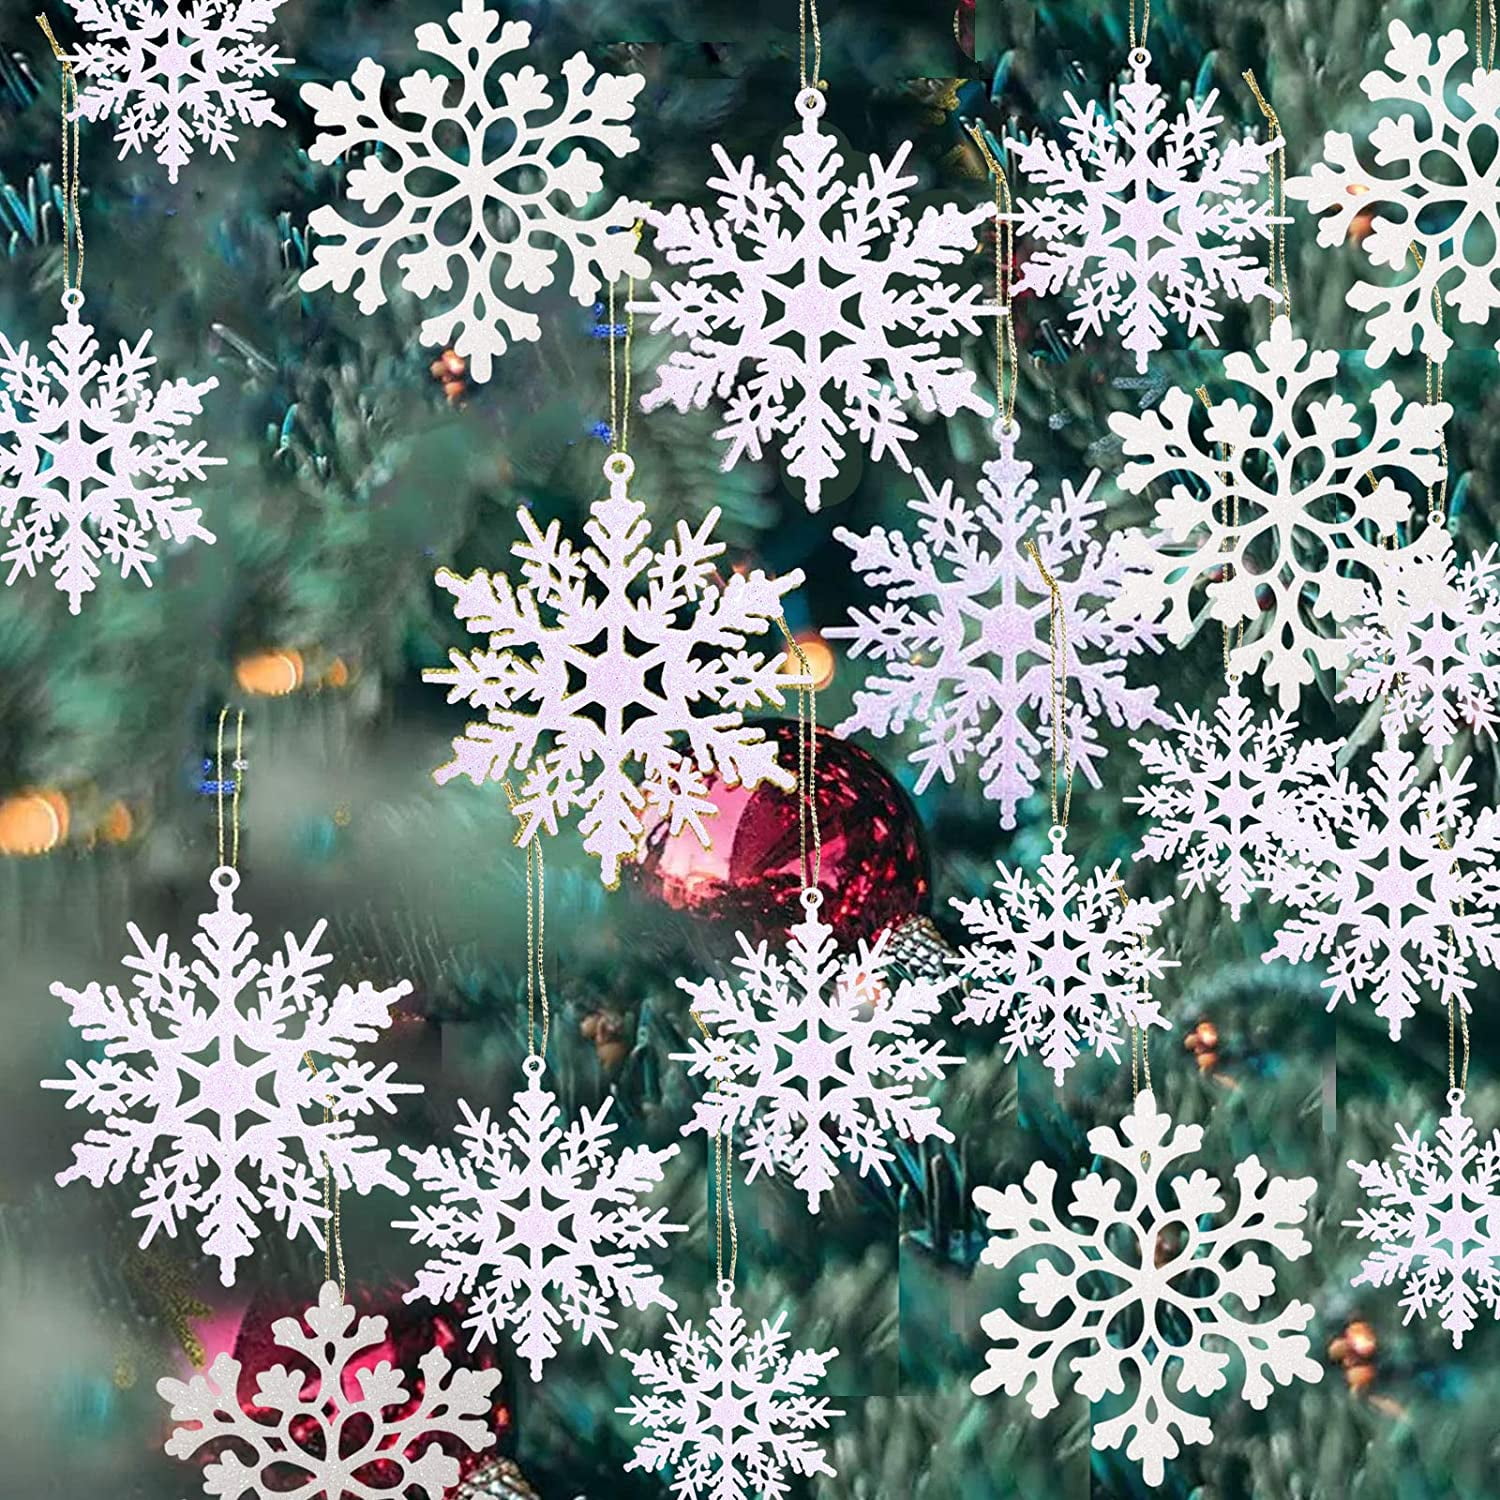 Snowflake Decorations, Snowflake Confetti, Winter Wonderland